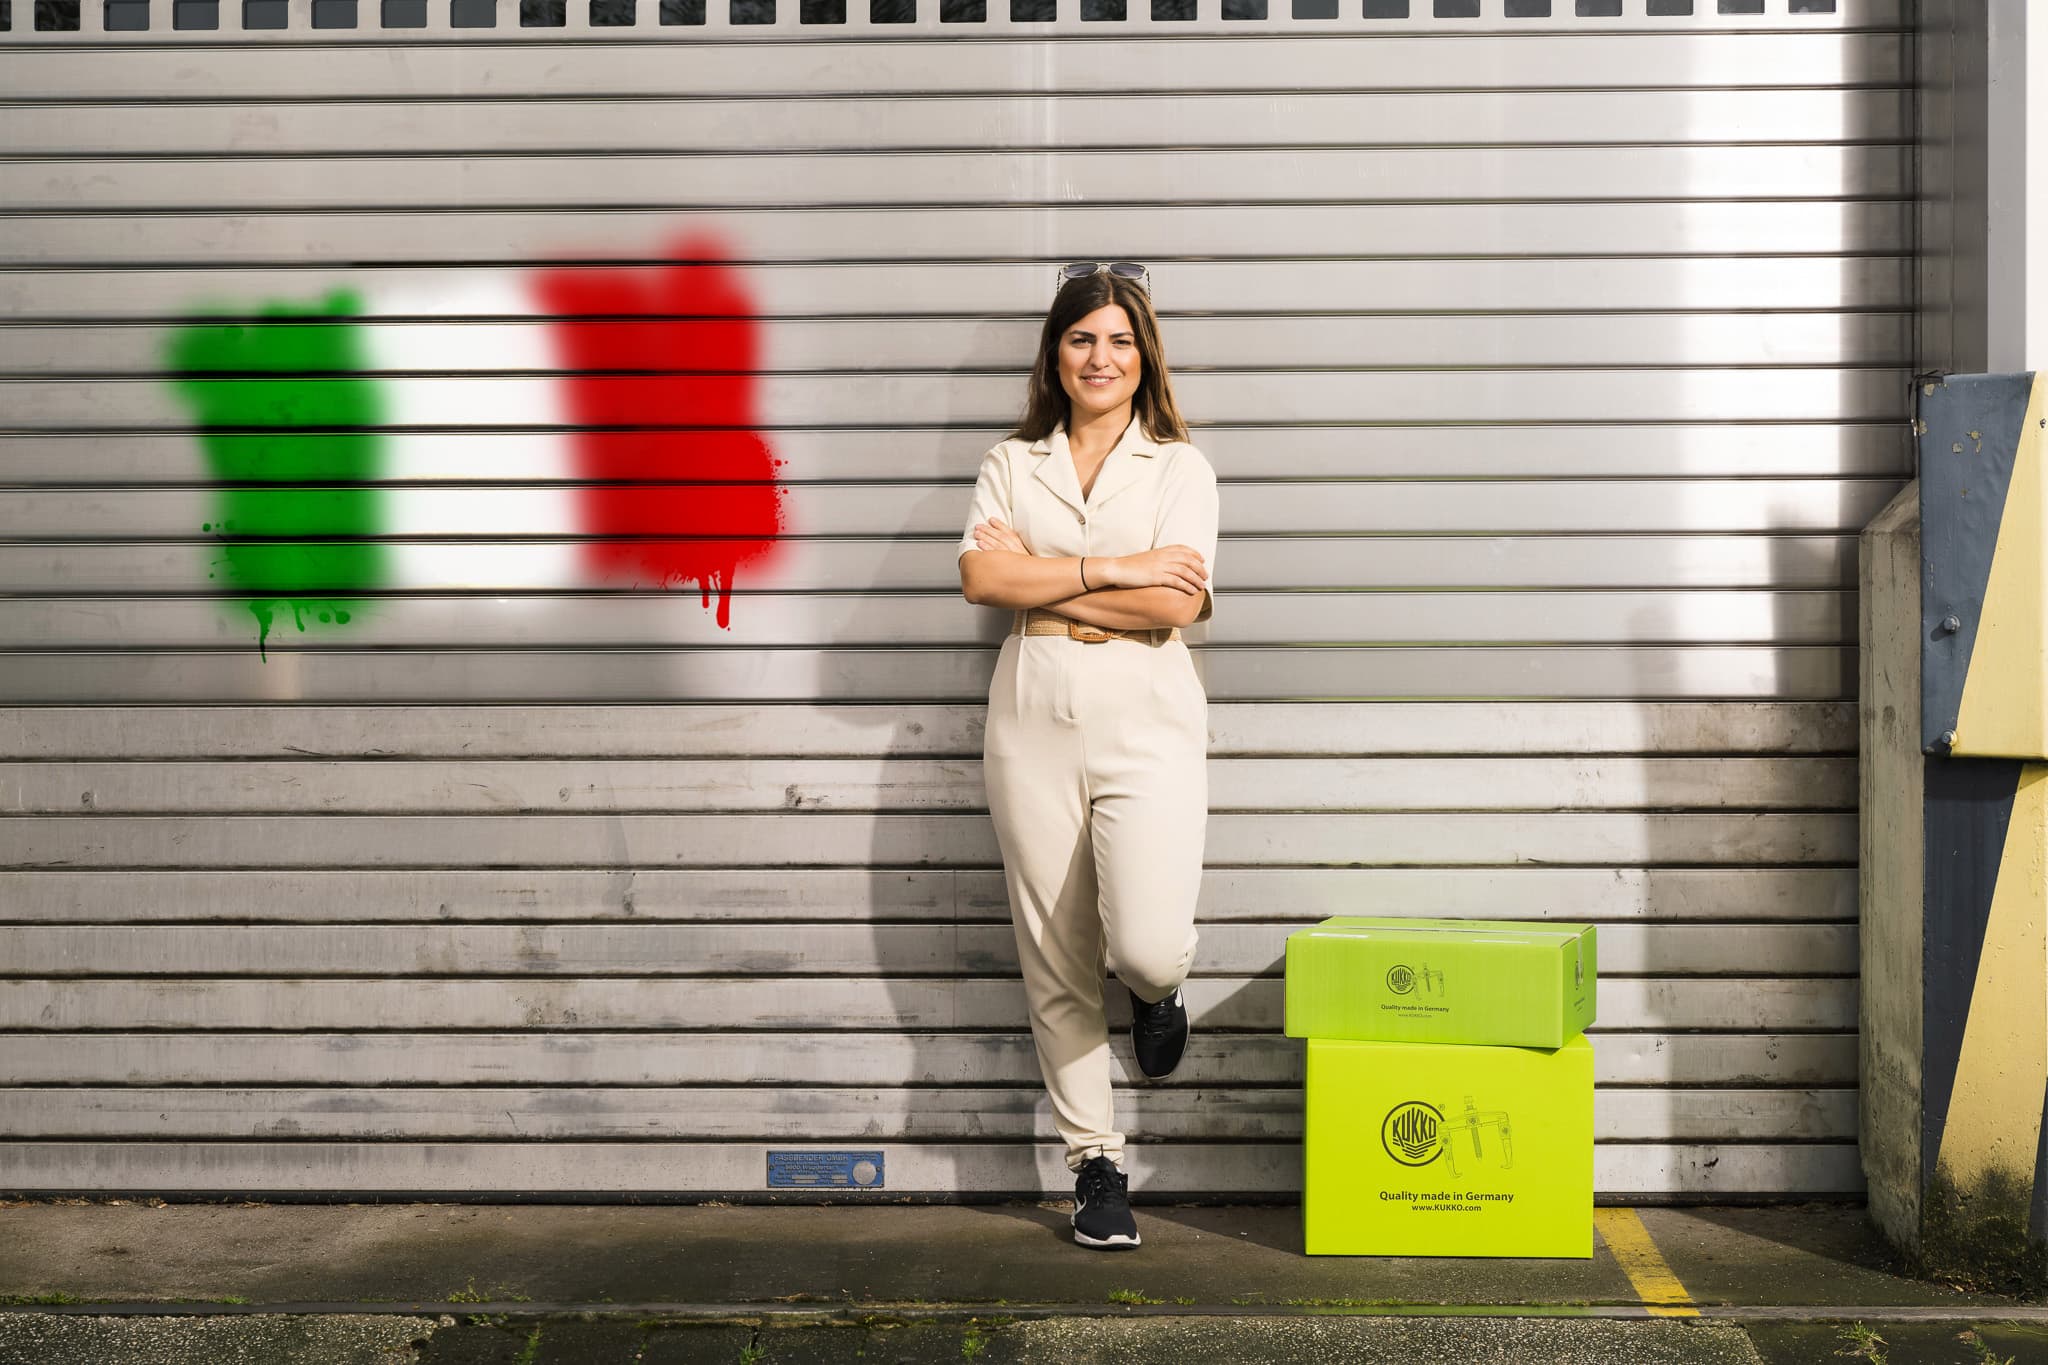 KUKKO Italia employee in front of rolling gate with Italian flag